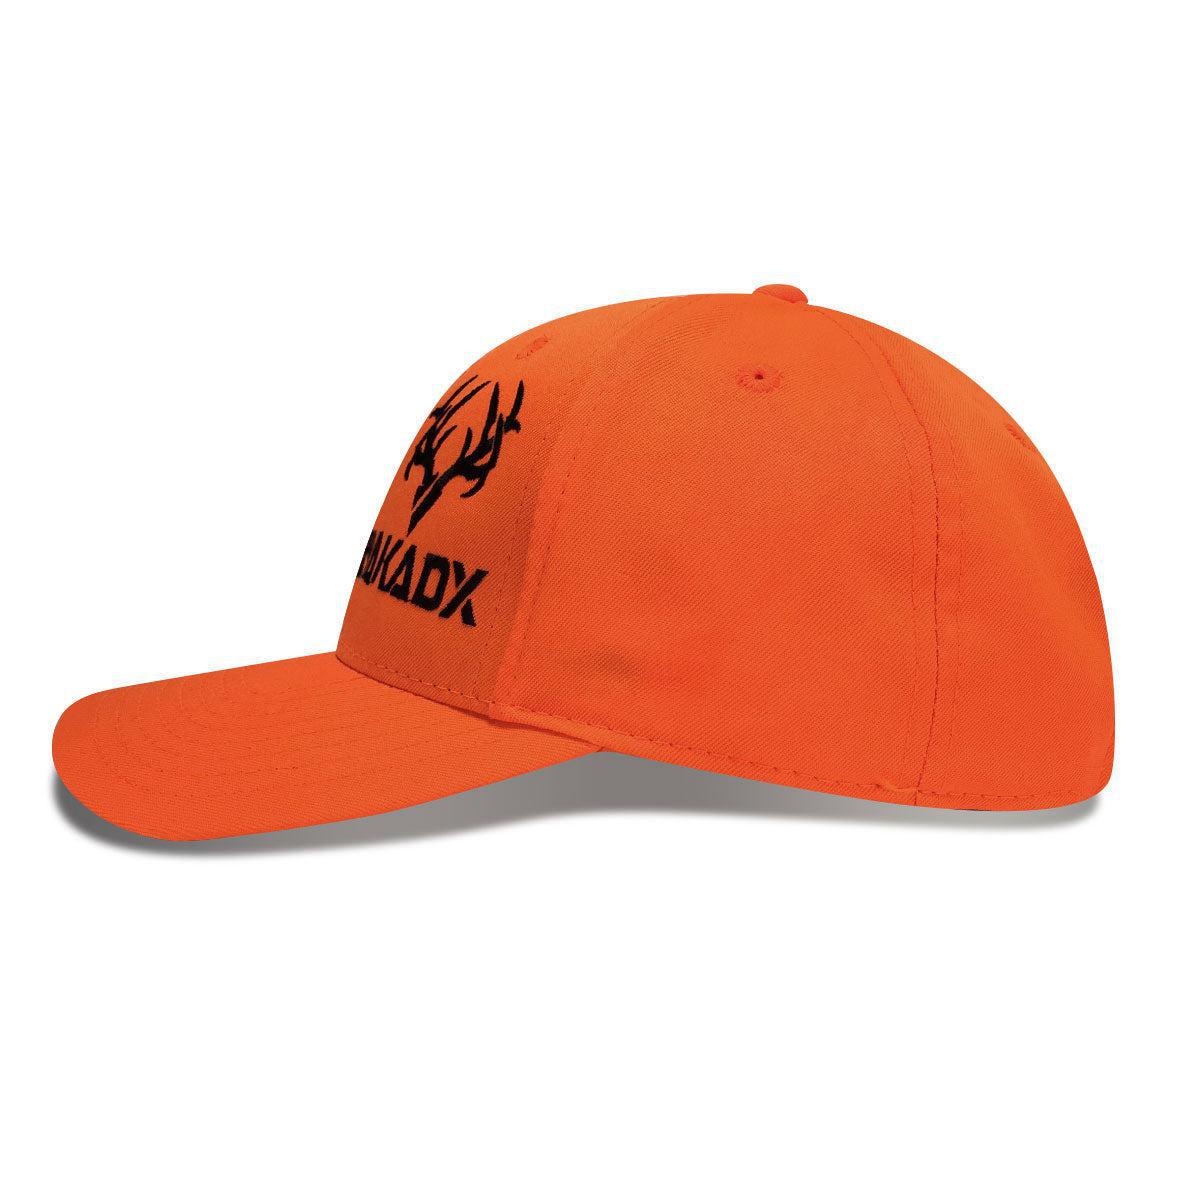 Hunter Orange Flex Hat at RakAdx S/M